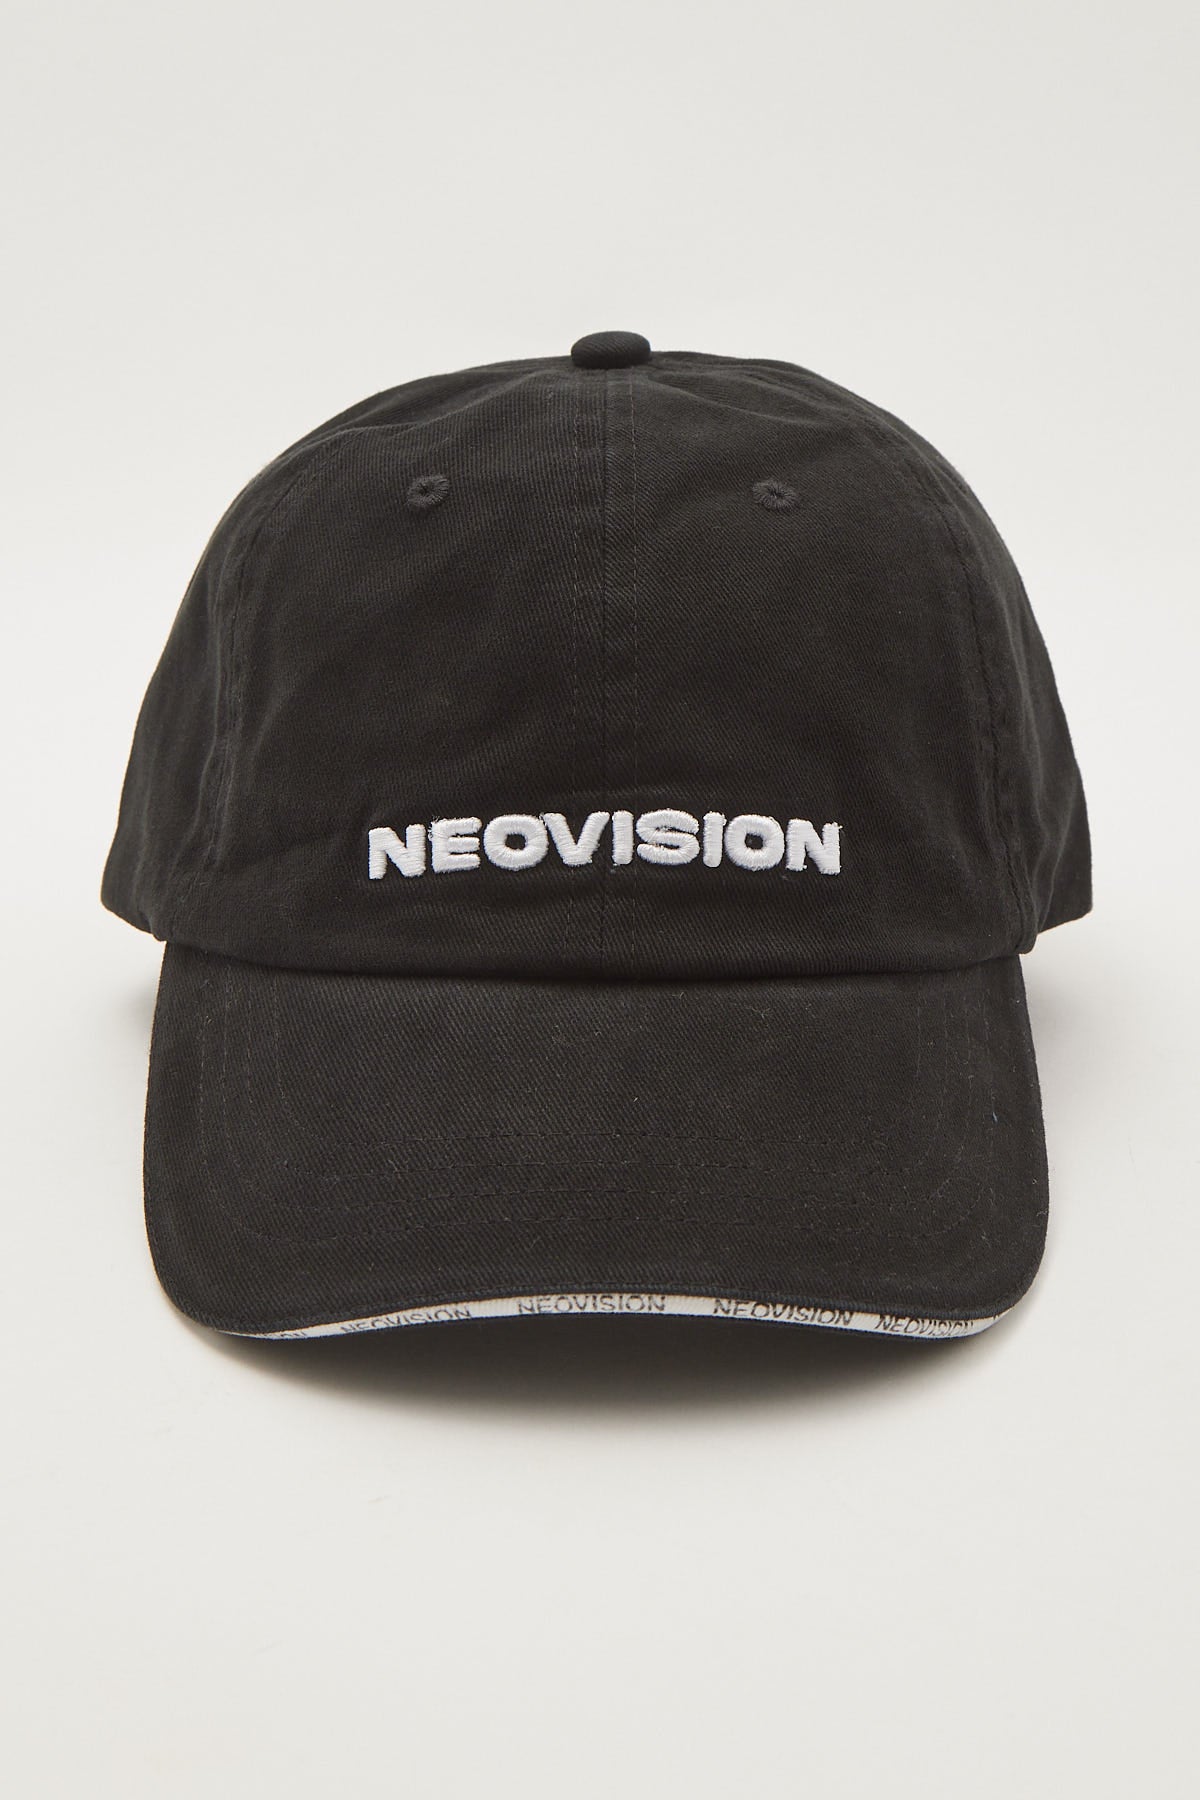 Neovision Encryption Dad Cap Black